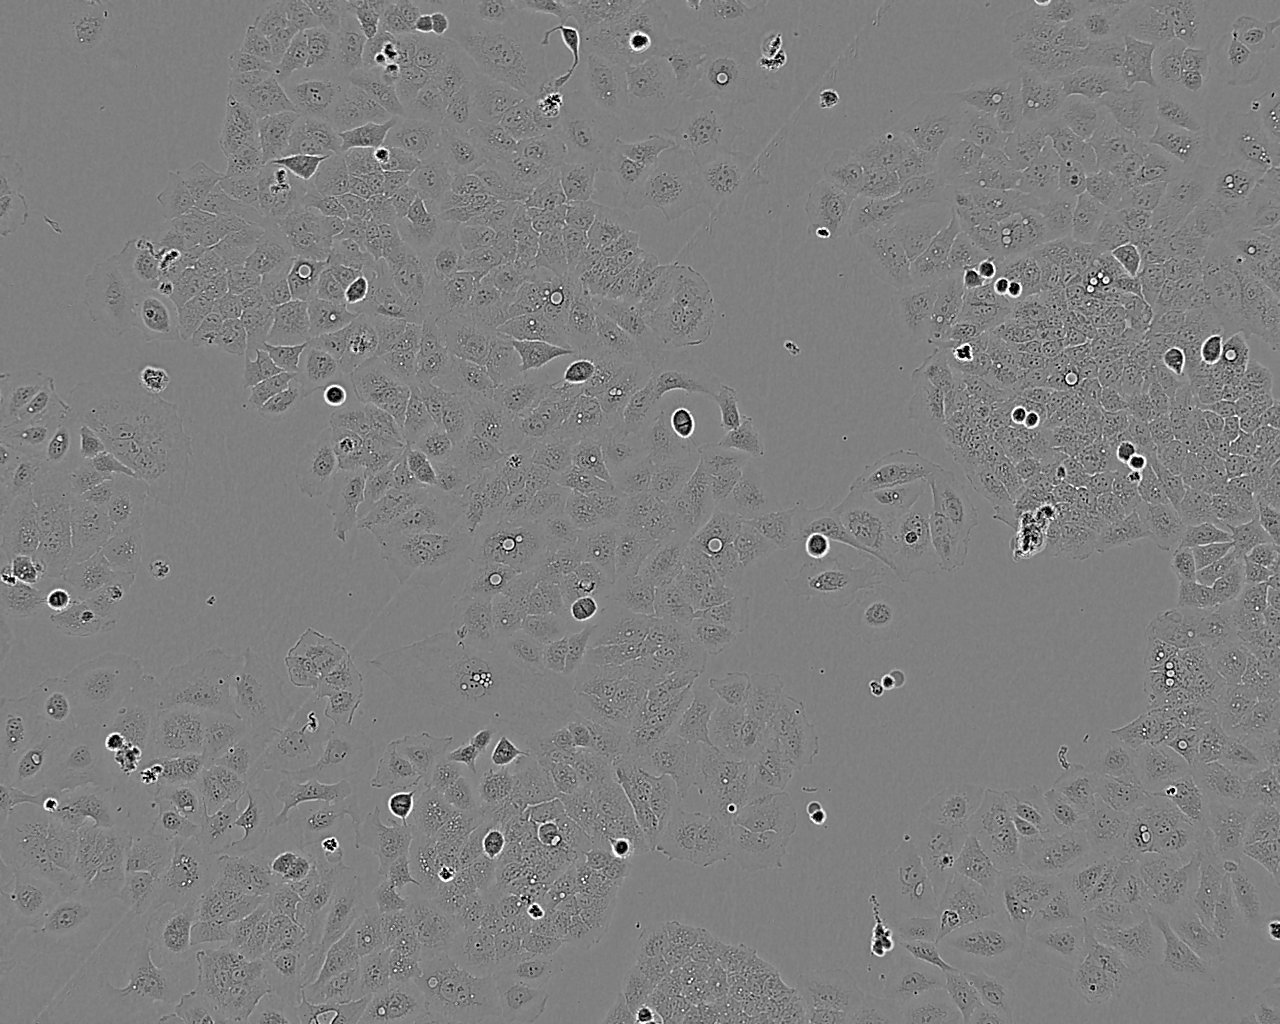 HuCC-T1 epithelioid cells人胆管癌细胞系,HuCC-T1 epithelioid cells